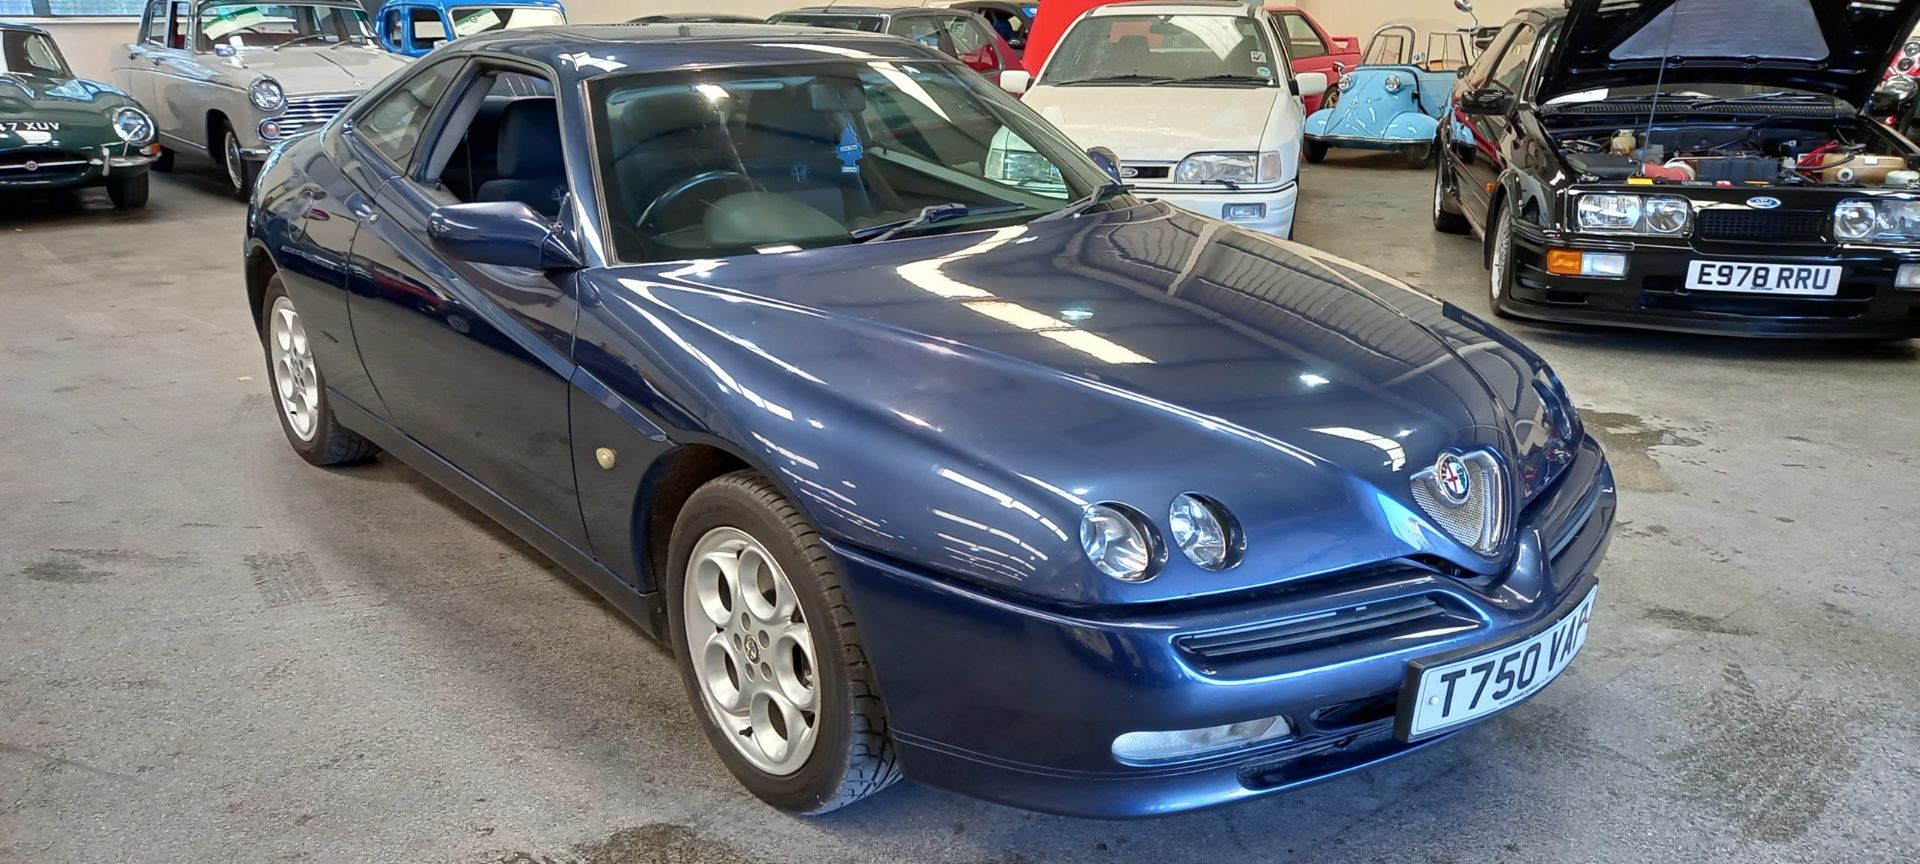 1999 ALFA ROMEO GTV